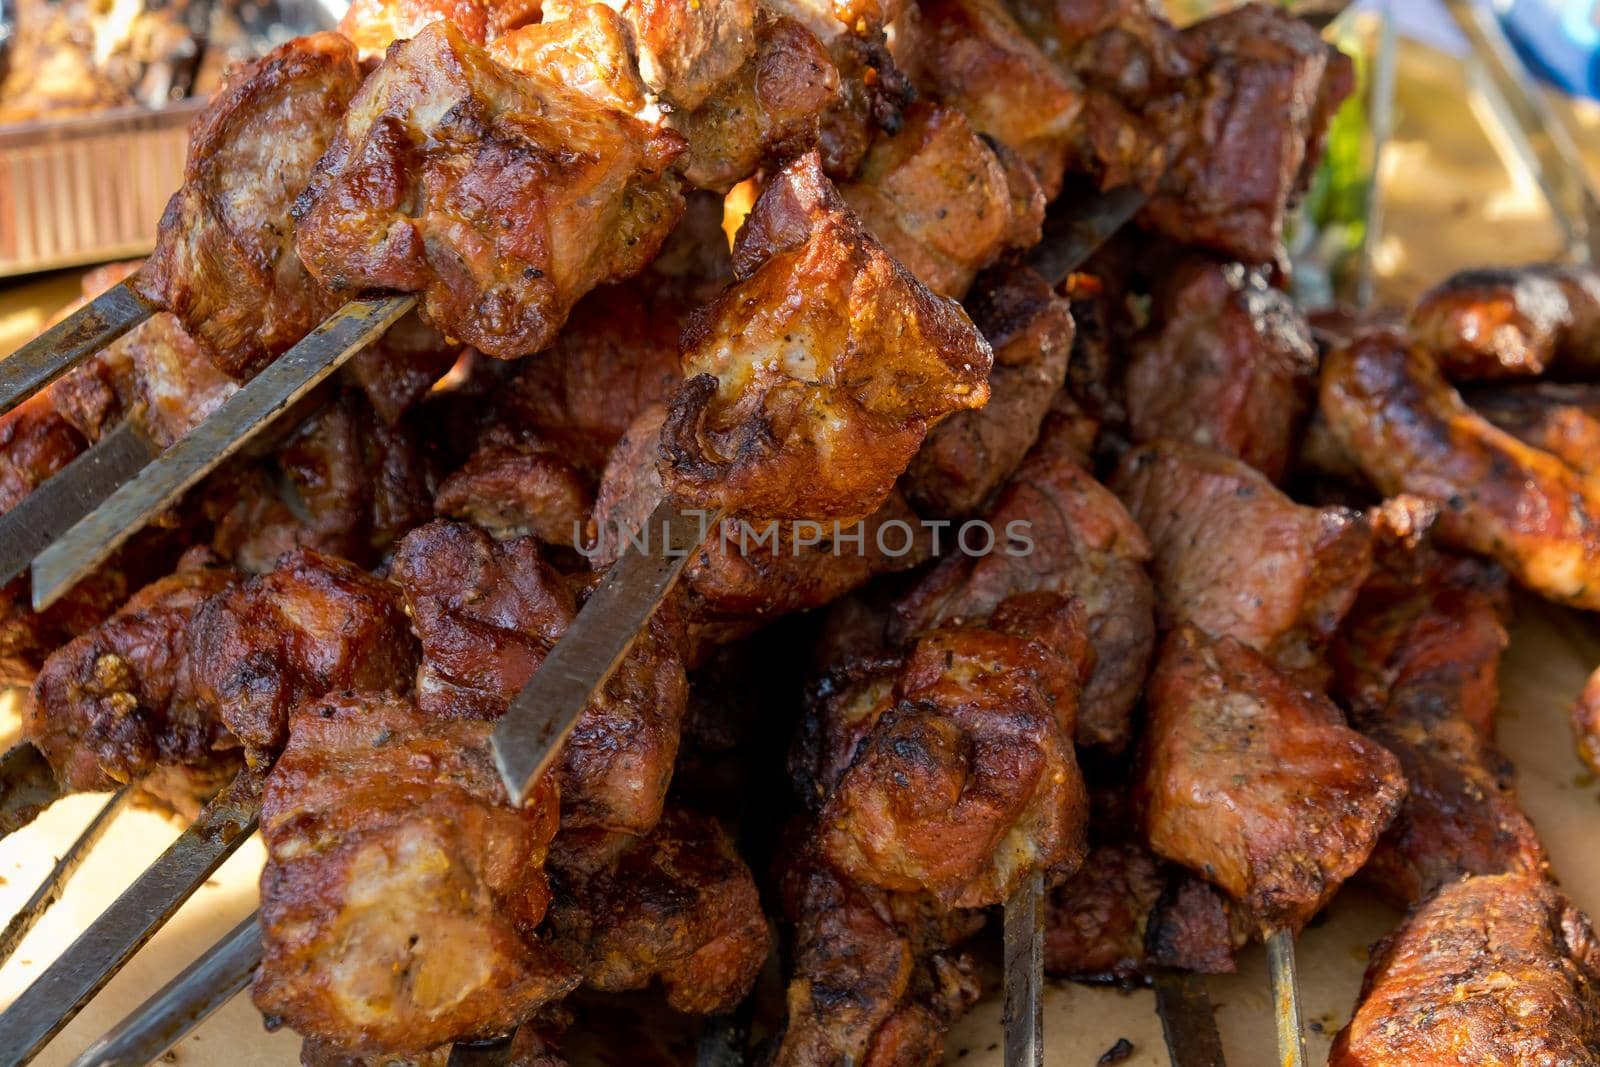 Fried kebab on skewers. Street food festival. Close-up. Selective focus. by leonik